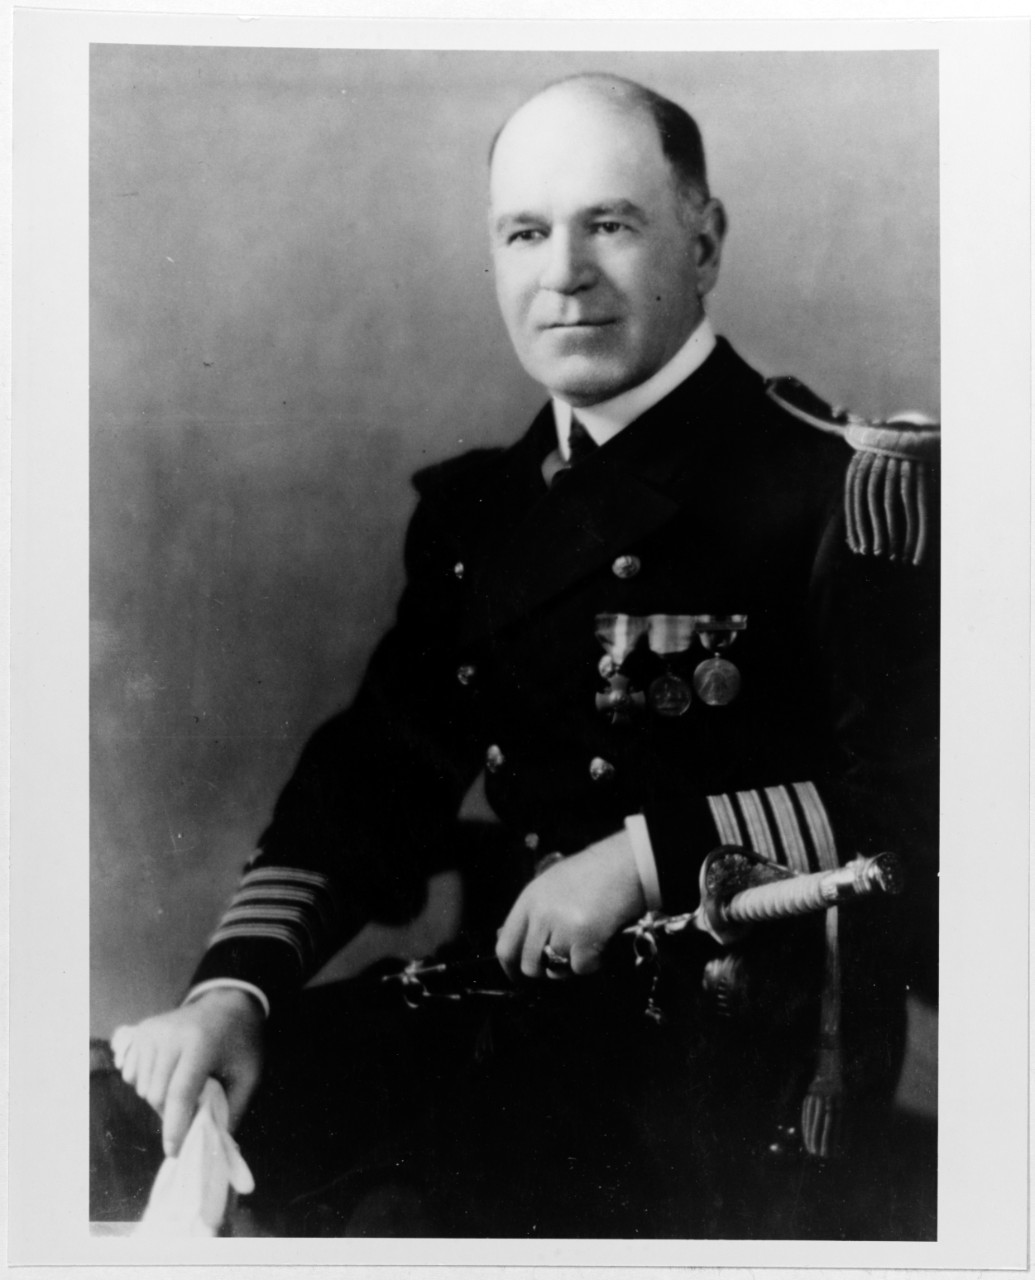 Captain J.R. Dexness, USN